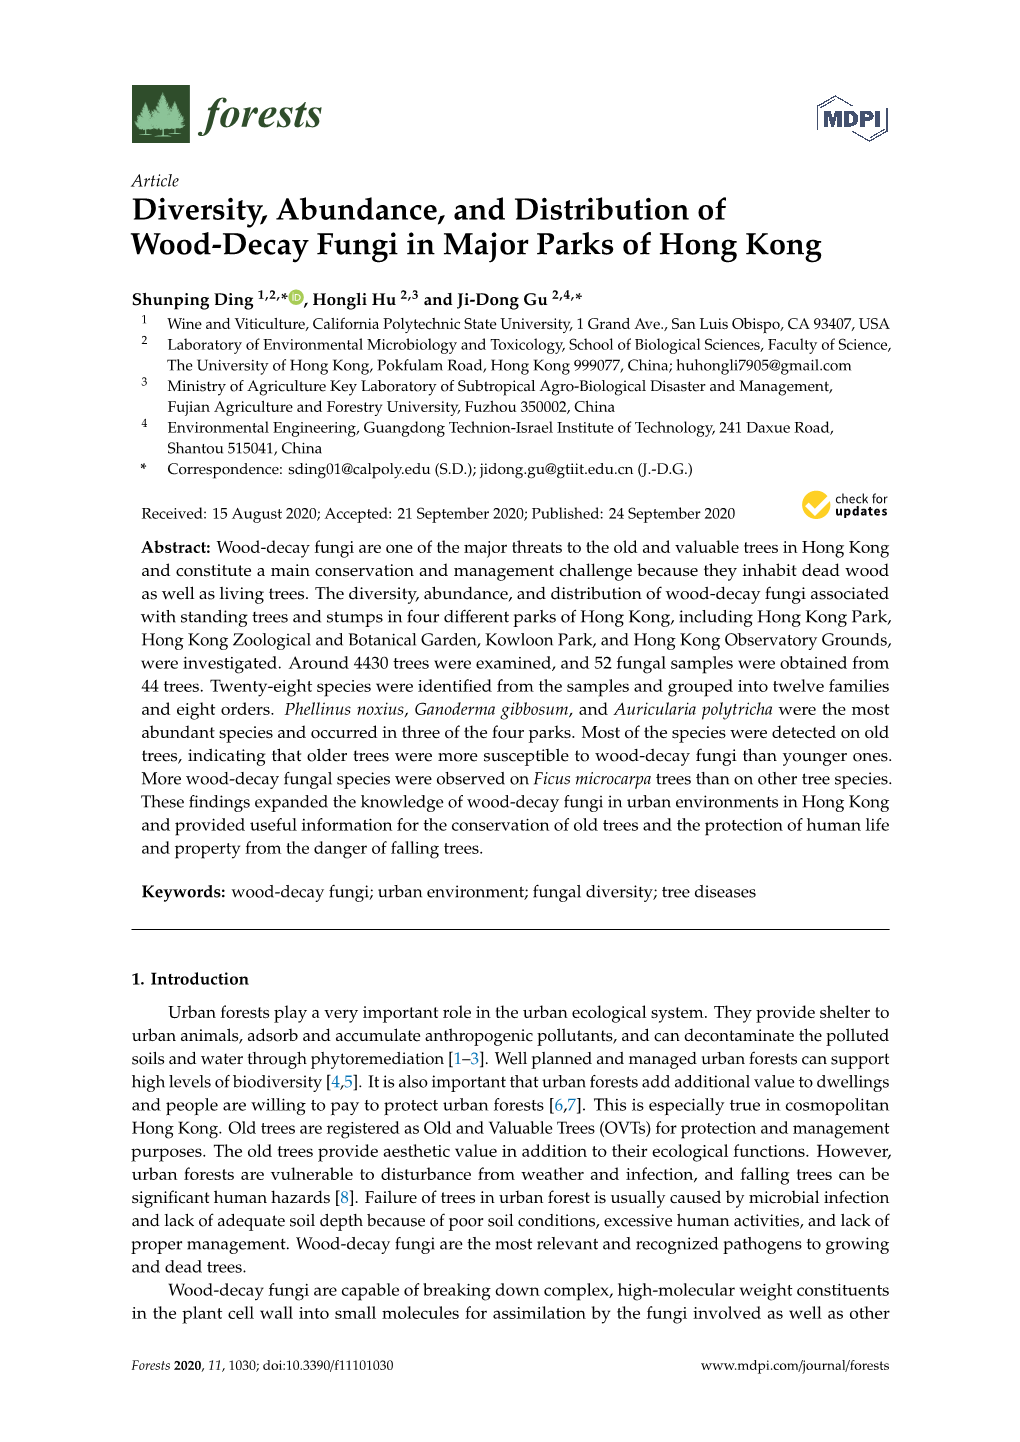 Diversity, Abundance, and Distribution of Wood-Decay Fungi in Major Parks of Hong Kong